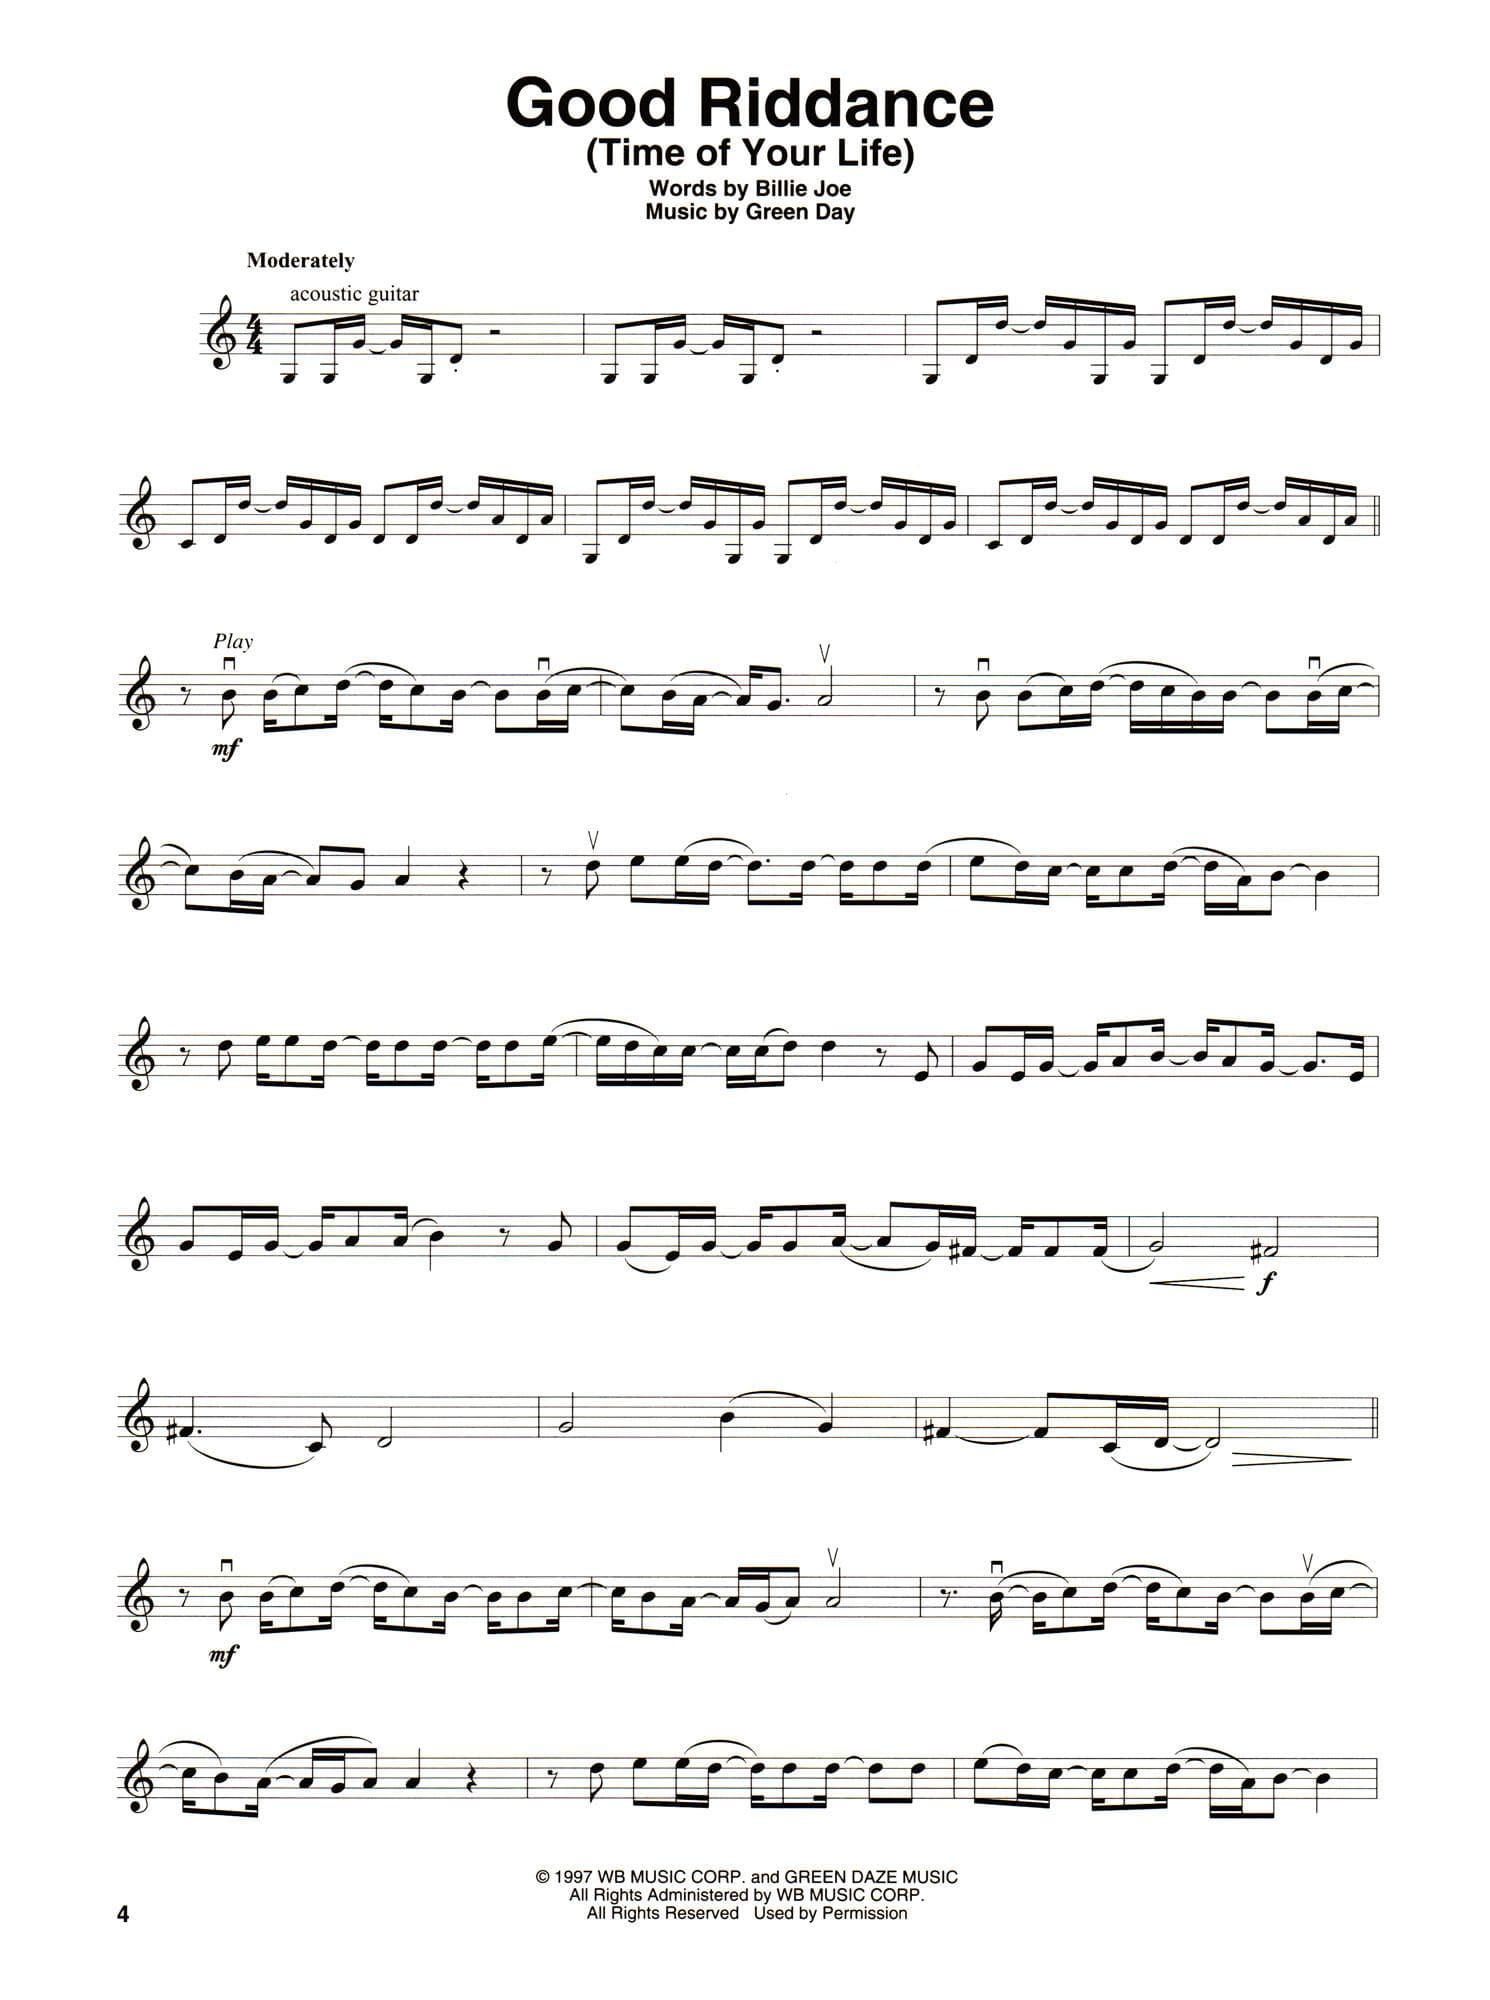 Rock Favorites - Violin Play-Along Vol. 49 - 8 Favorites - for Violin with Audio Accompaniment - Hal Leonard